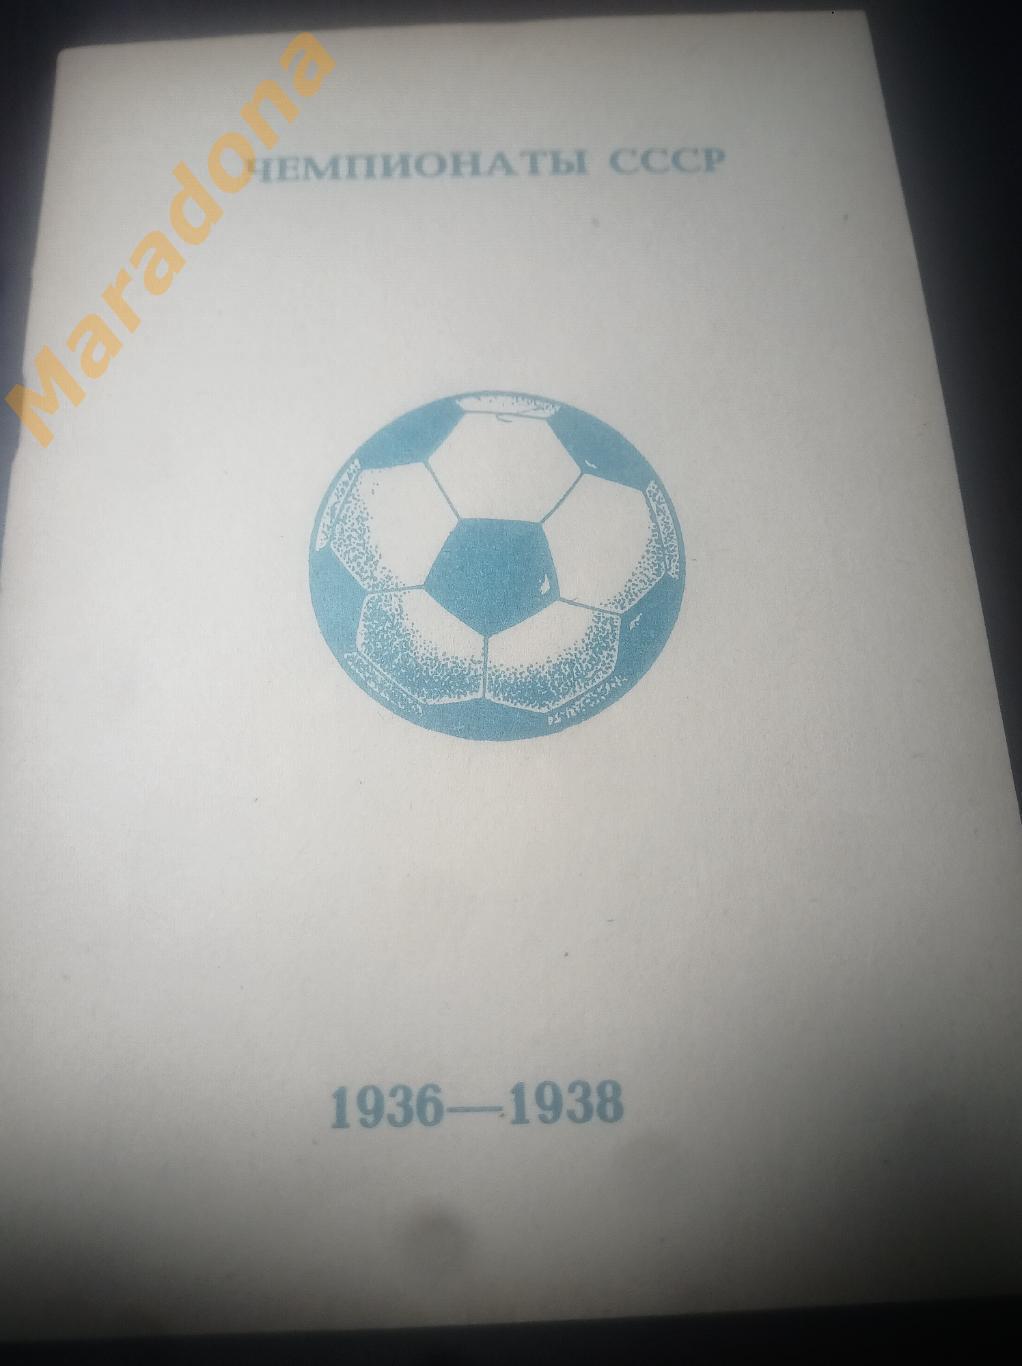 Колос Чемпионаты СССР 1936 - 1938